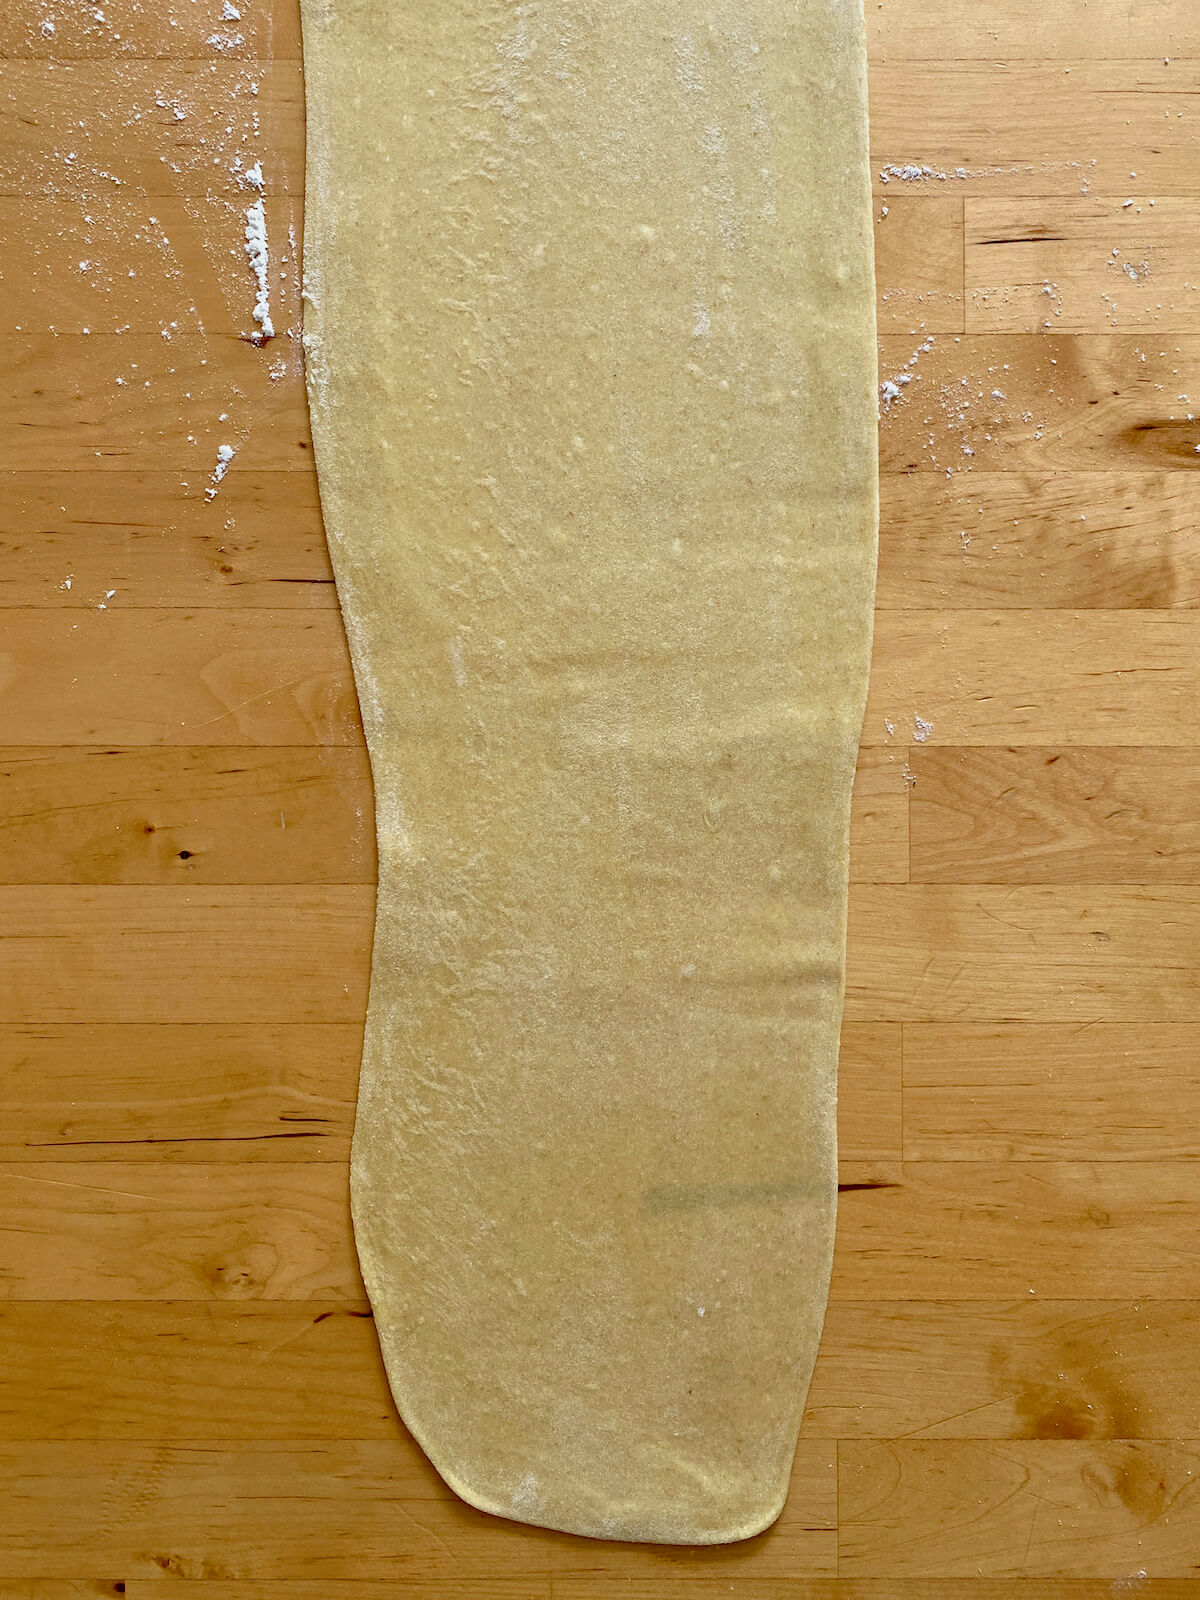 A rolled out sheet of sourdough discard pasta dough.